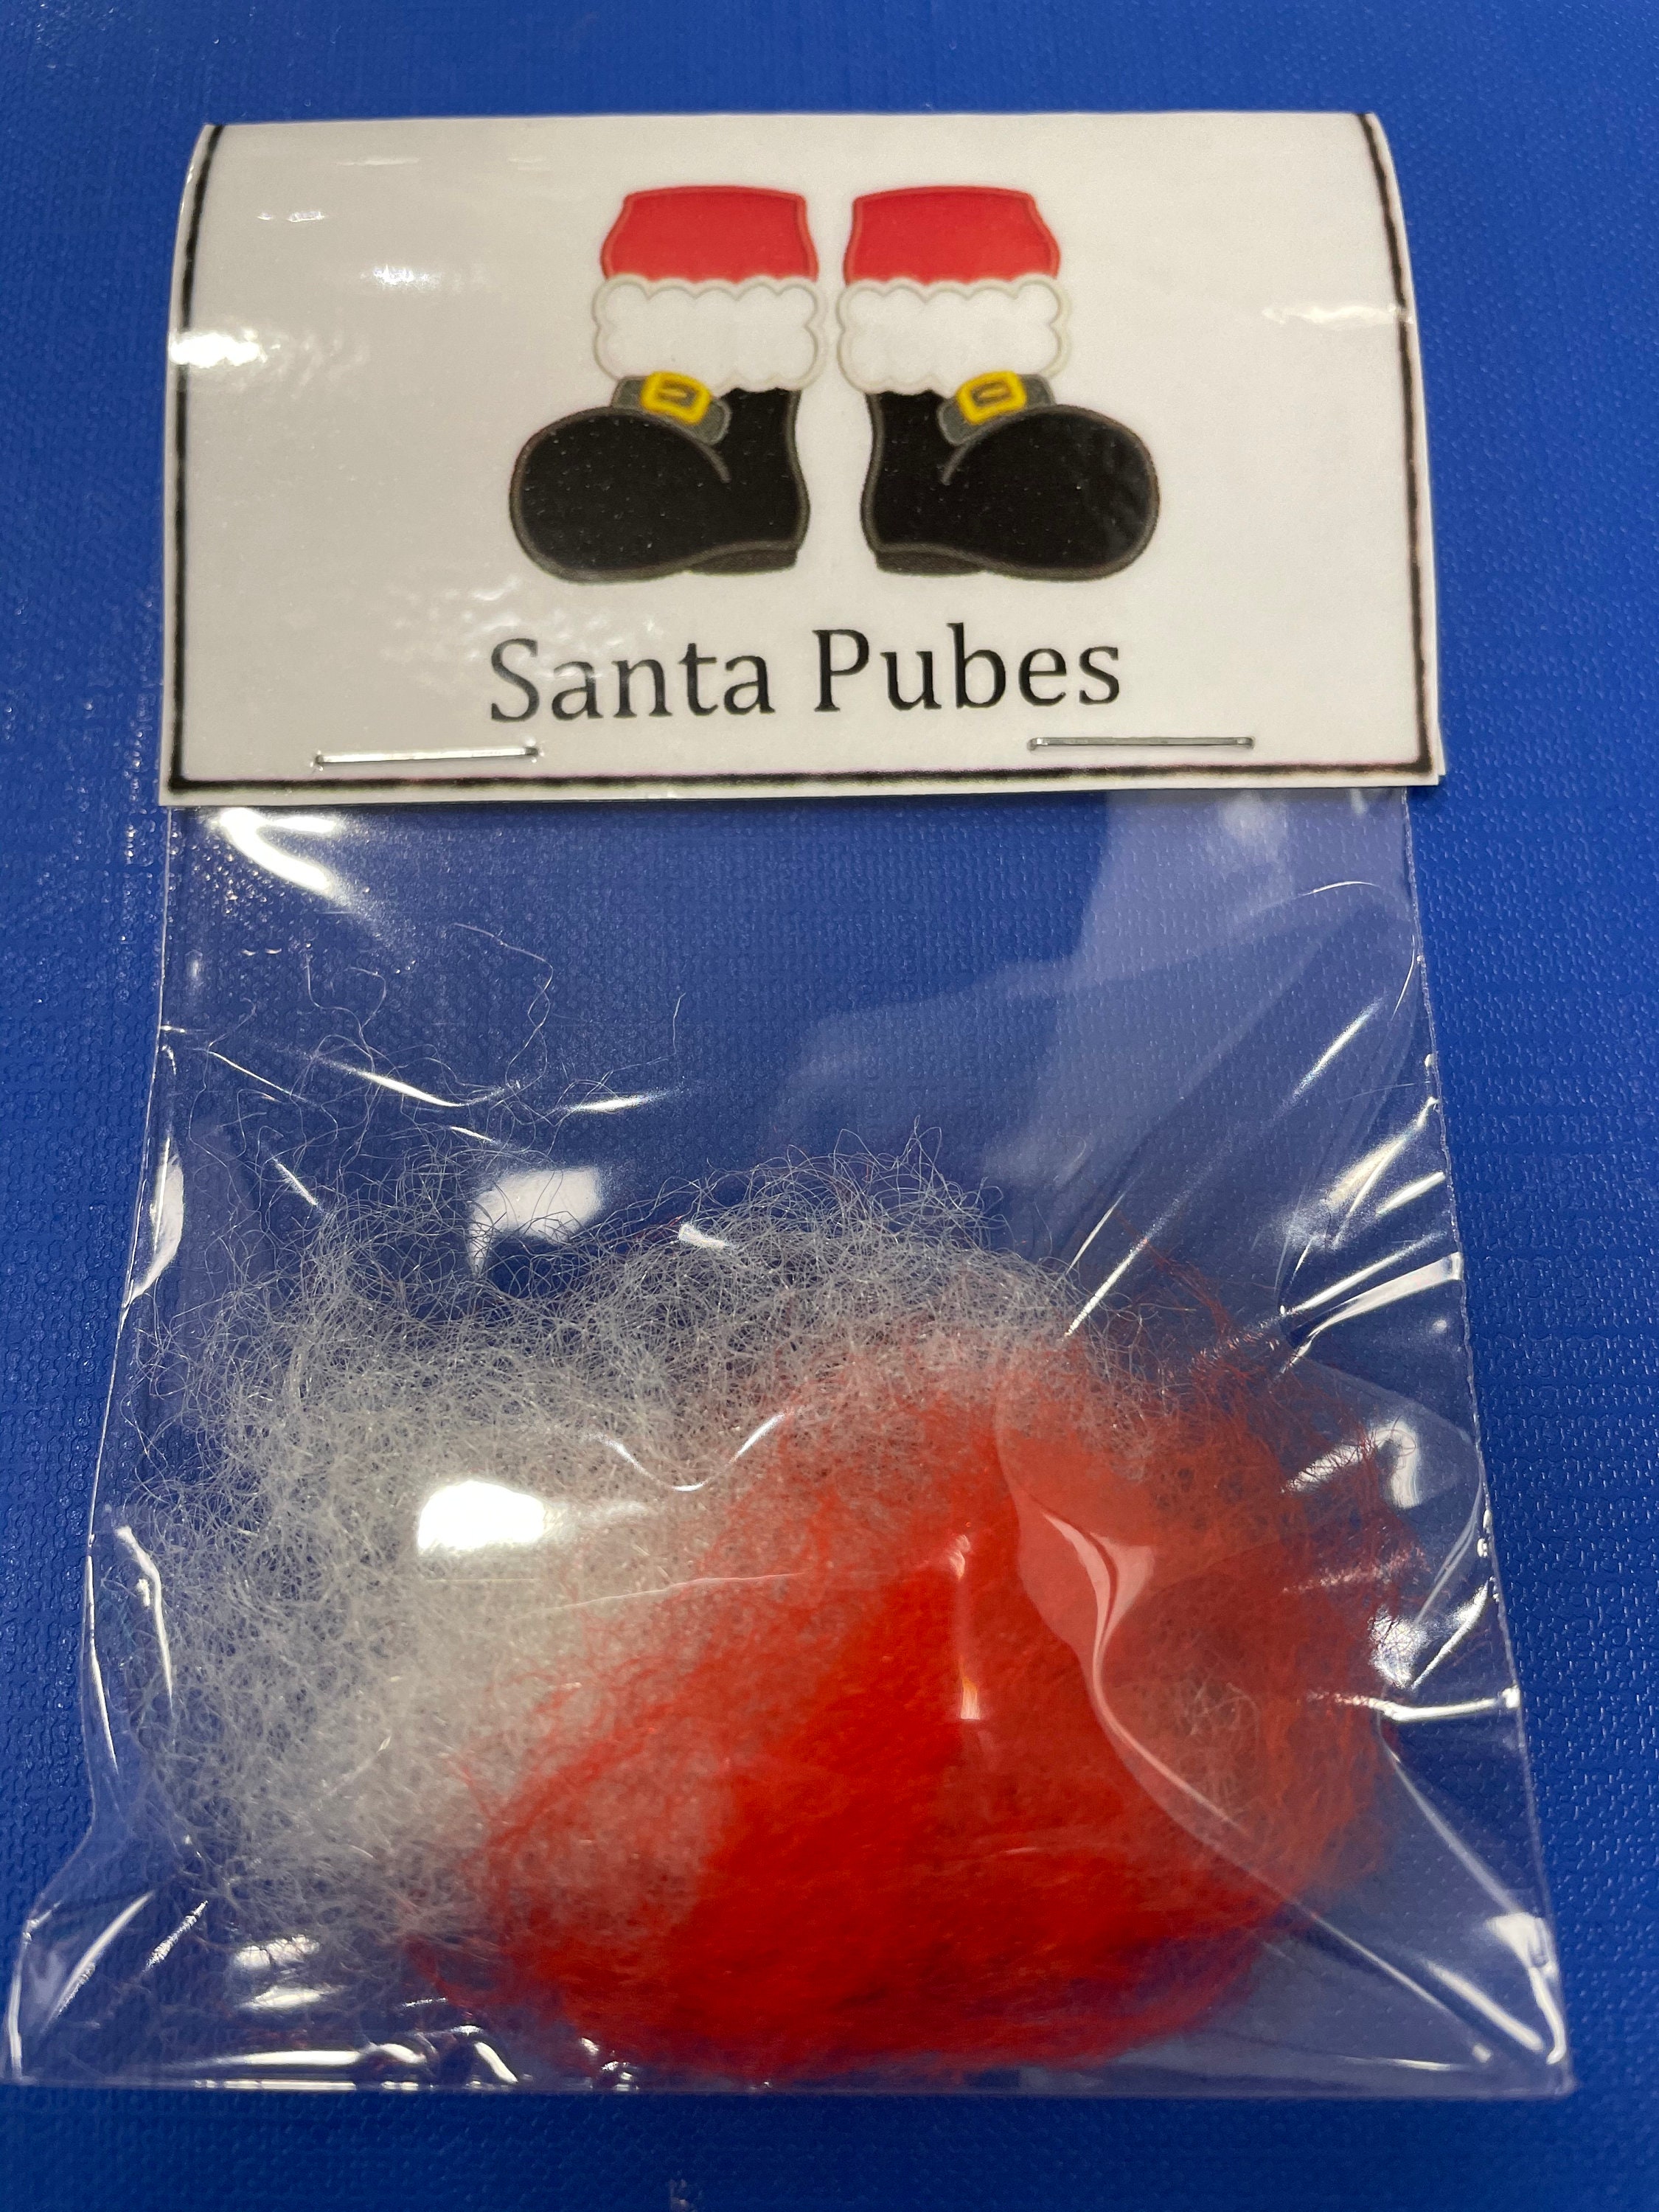 Funny Rude Offensive Xmas Pens Cheap Christmas Stocking Filler Secret Santa  Gift